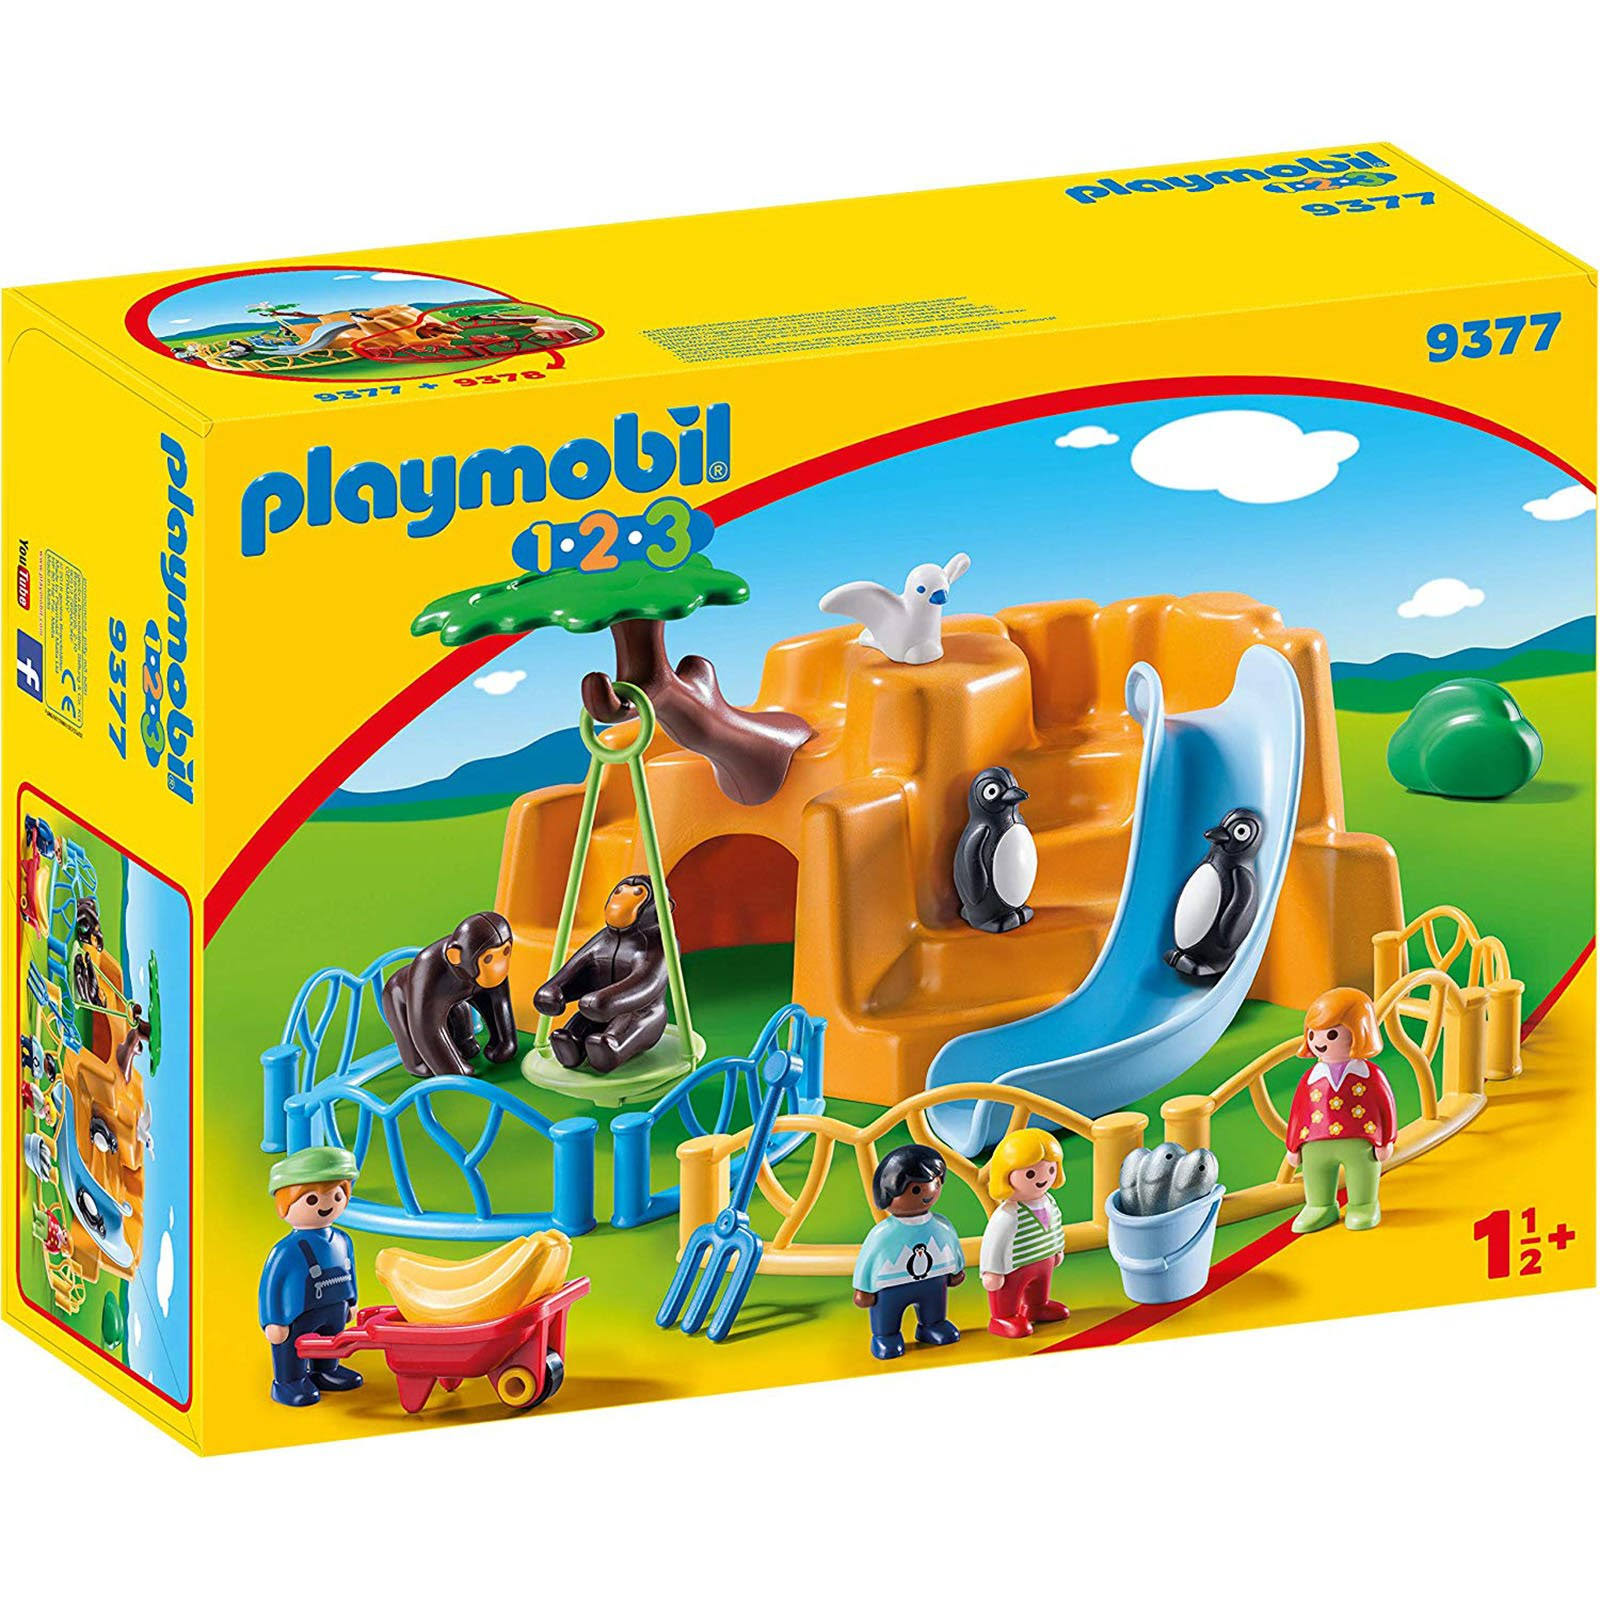 Playmobil 123 Zoo Playset